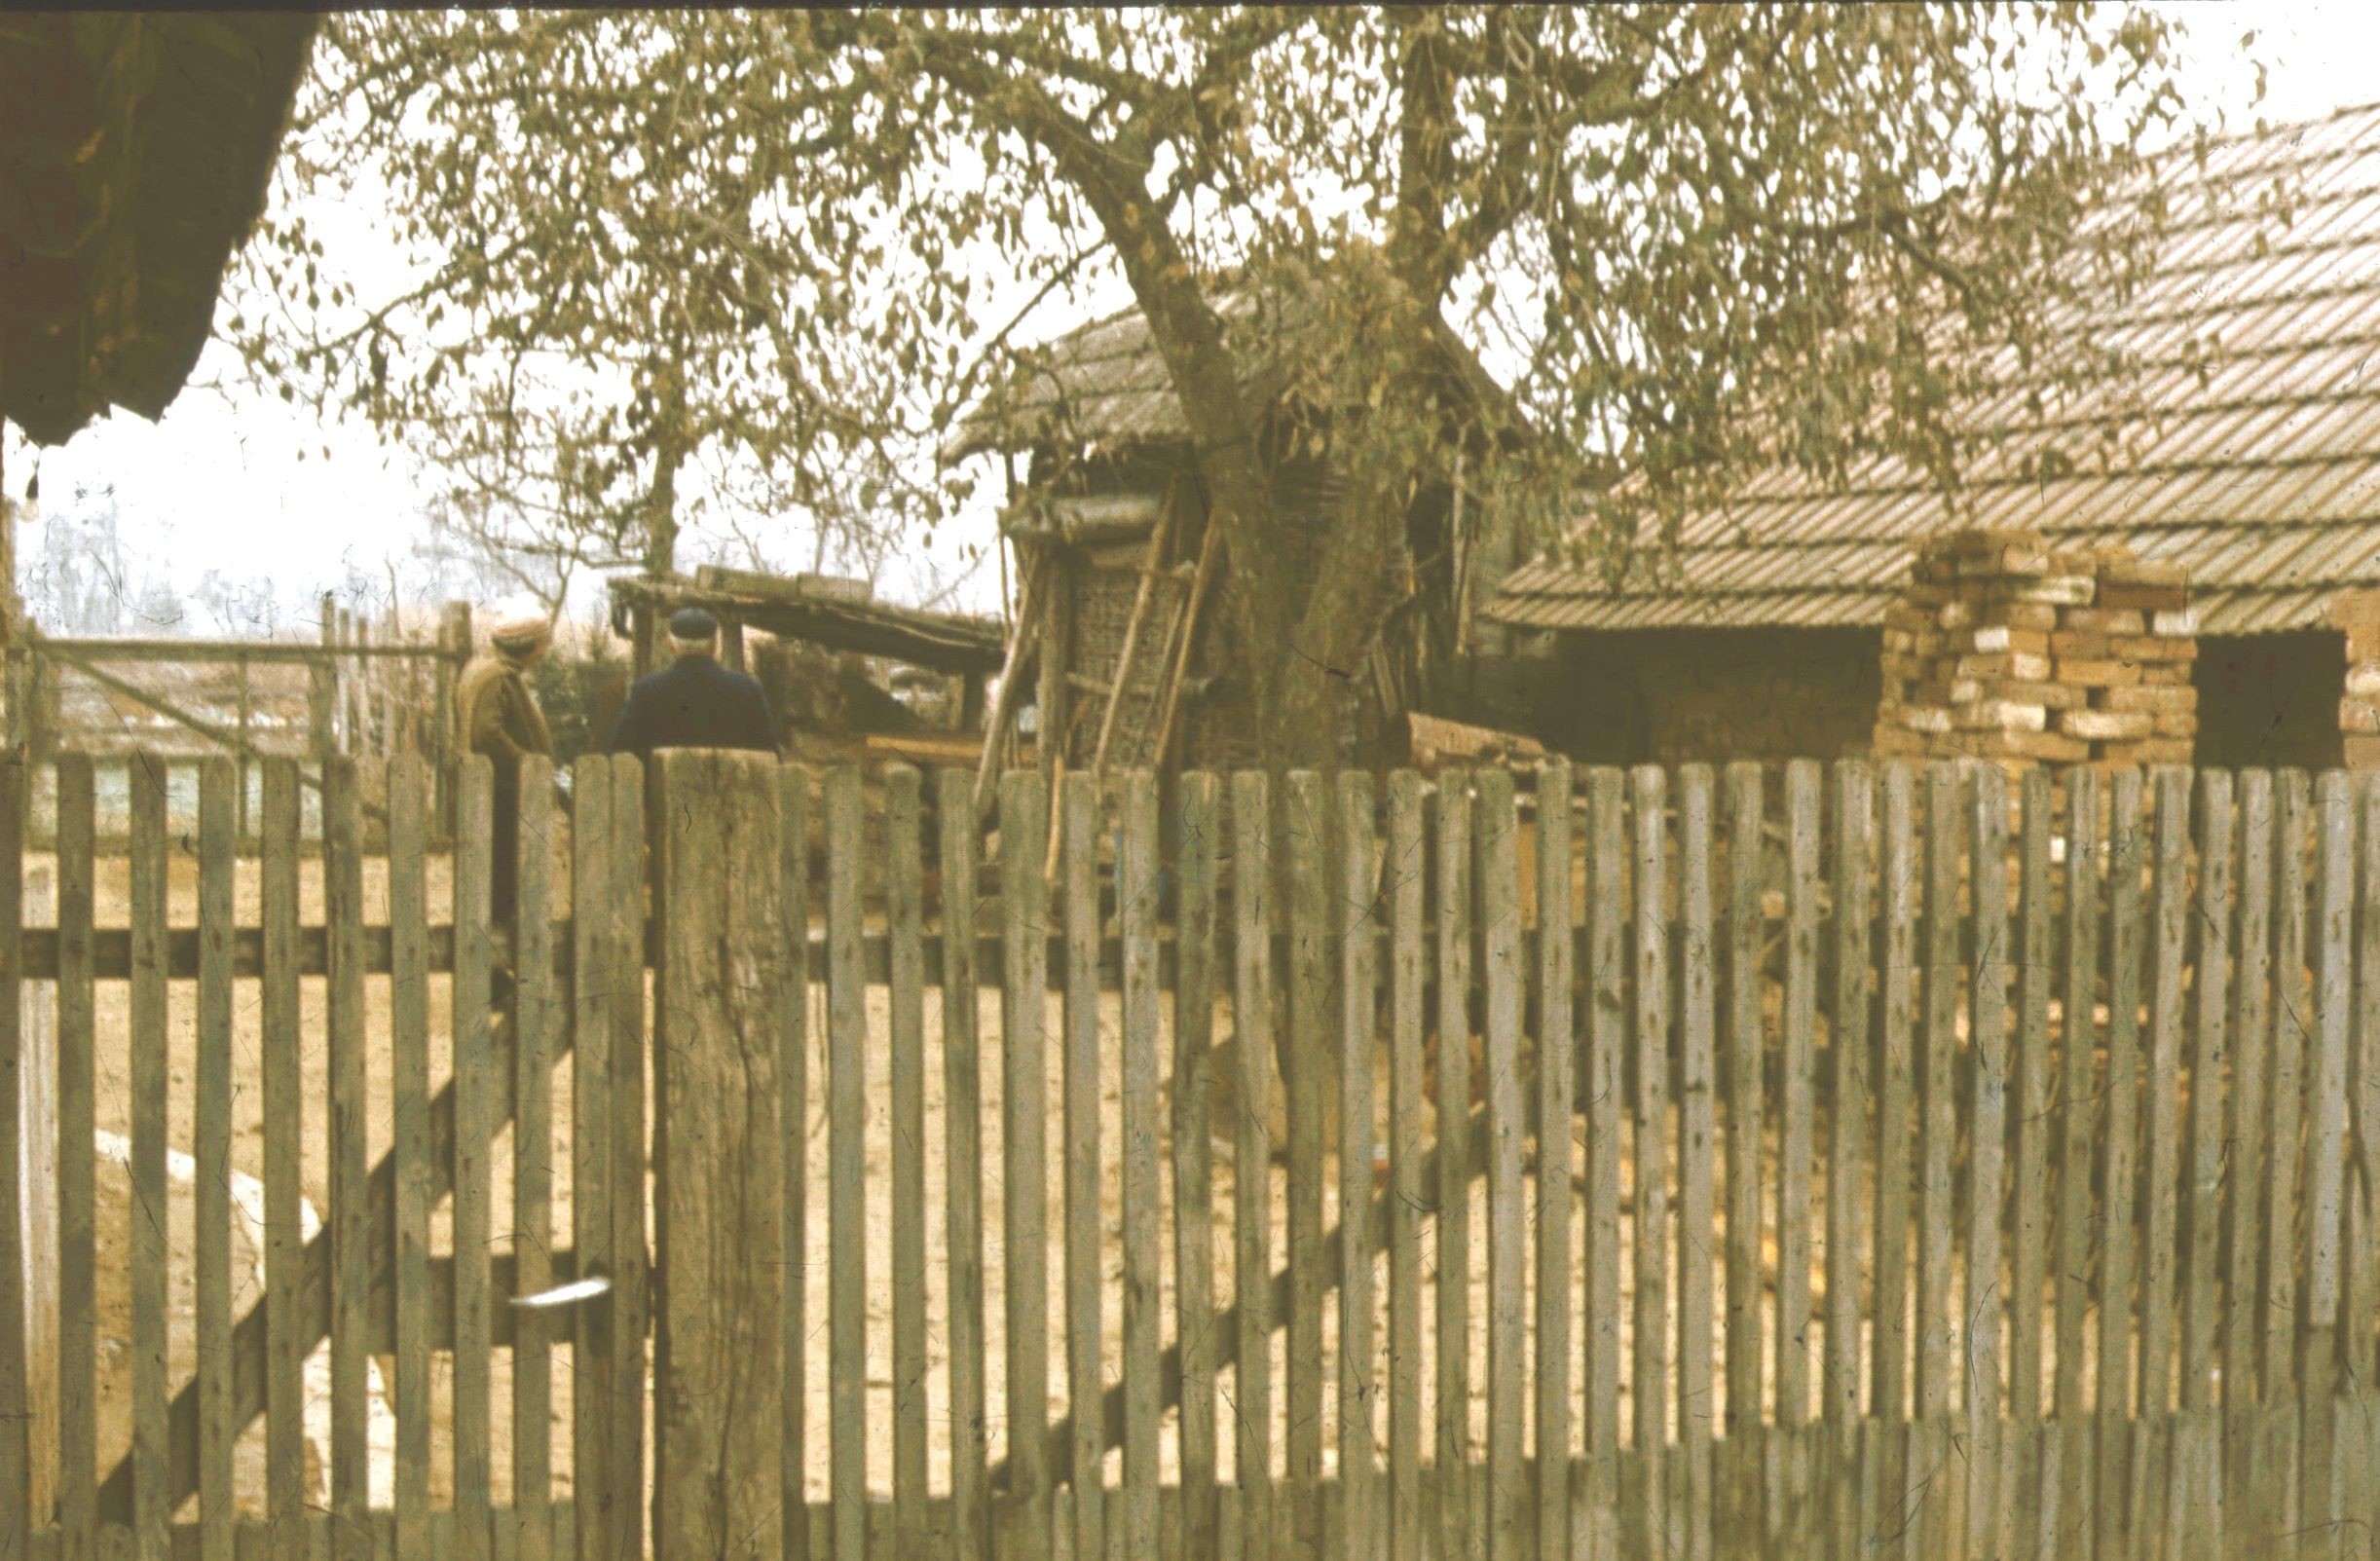 Baromfiudvar nézete DK-ről (Rippl-Rónai Múzeum CC BY-NC-ND)